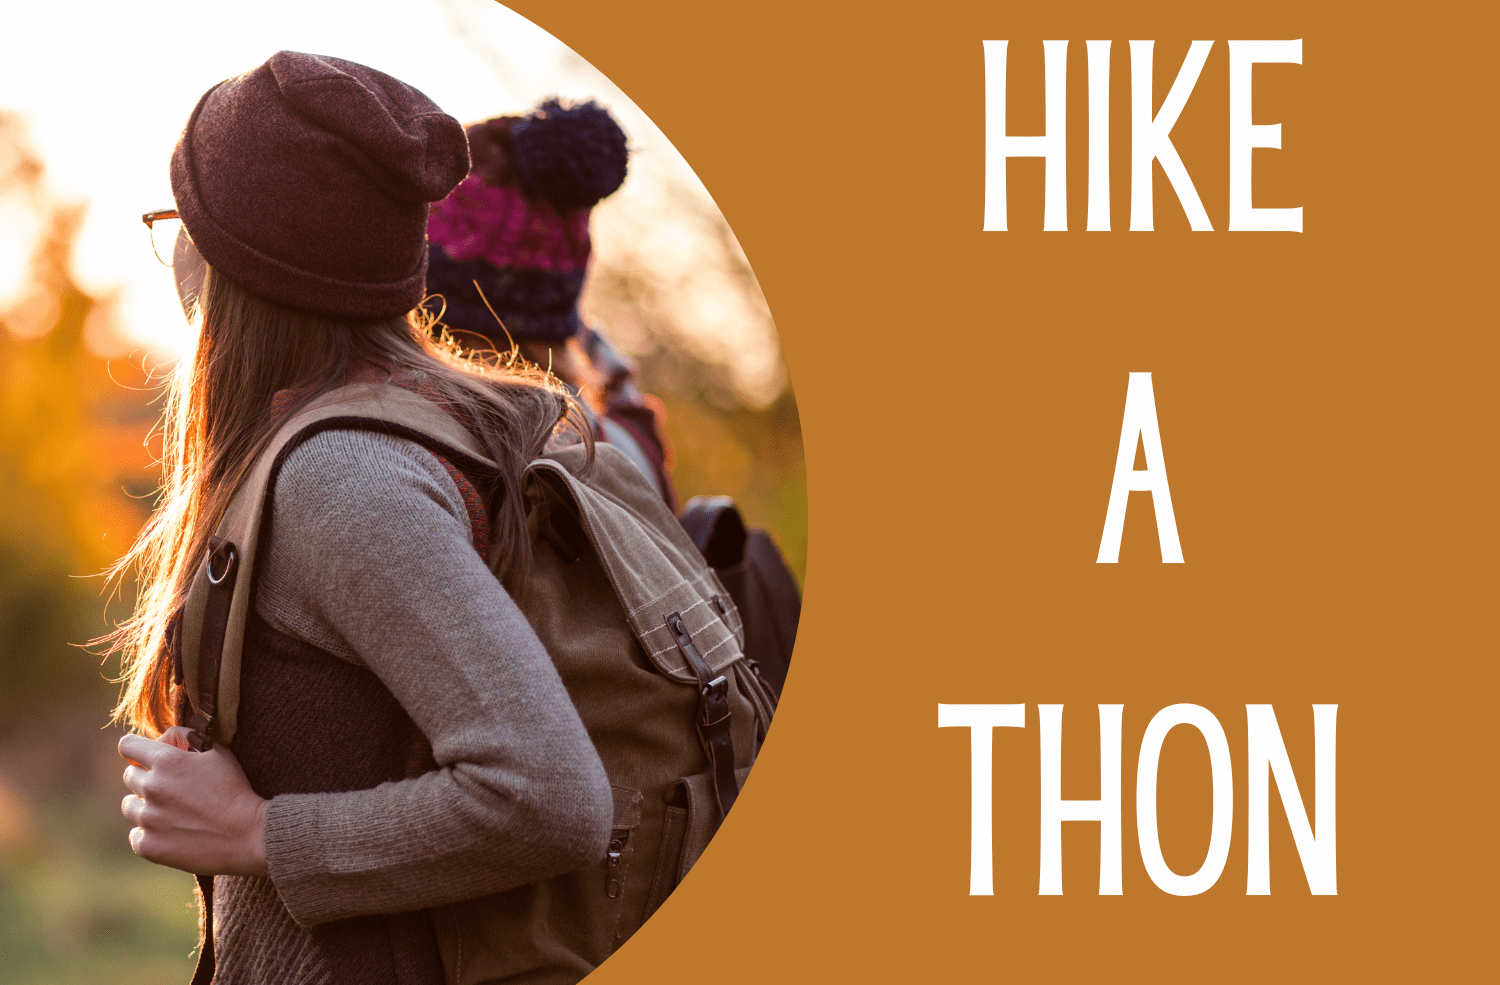 Hike-a-thon Finish Line Event